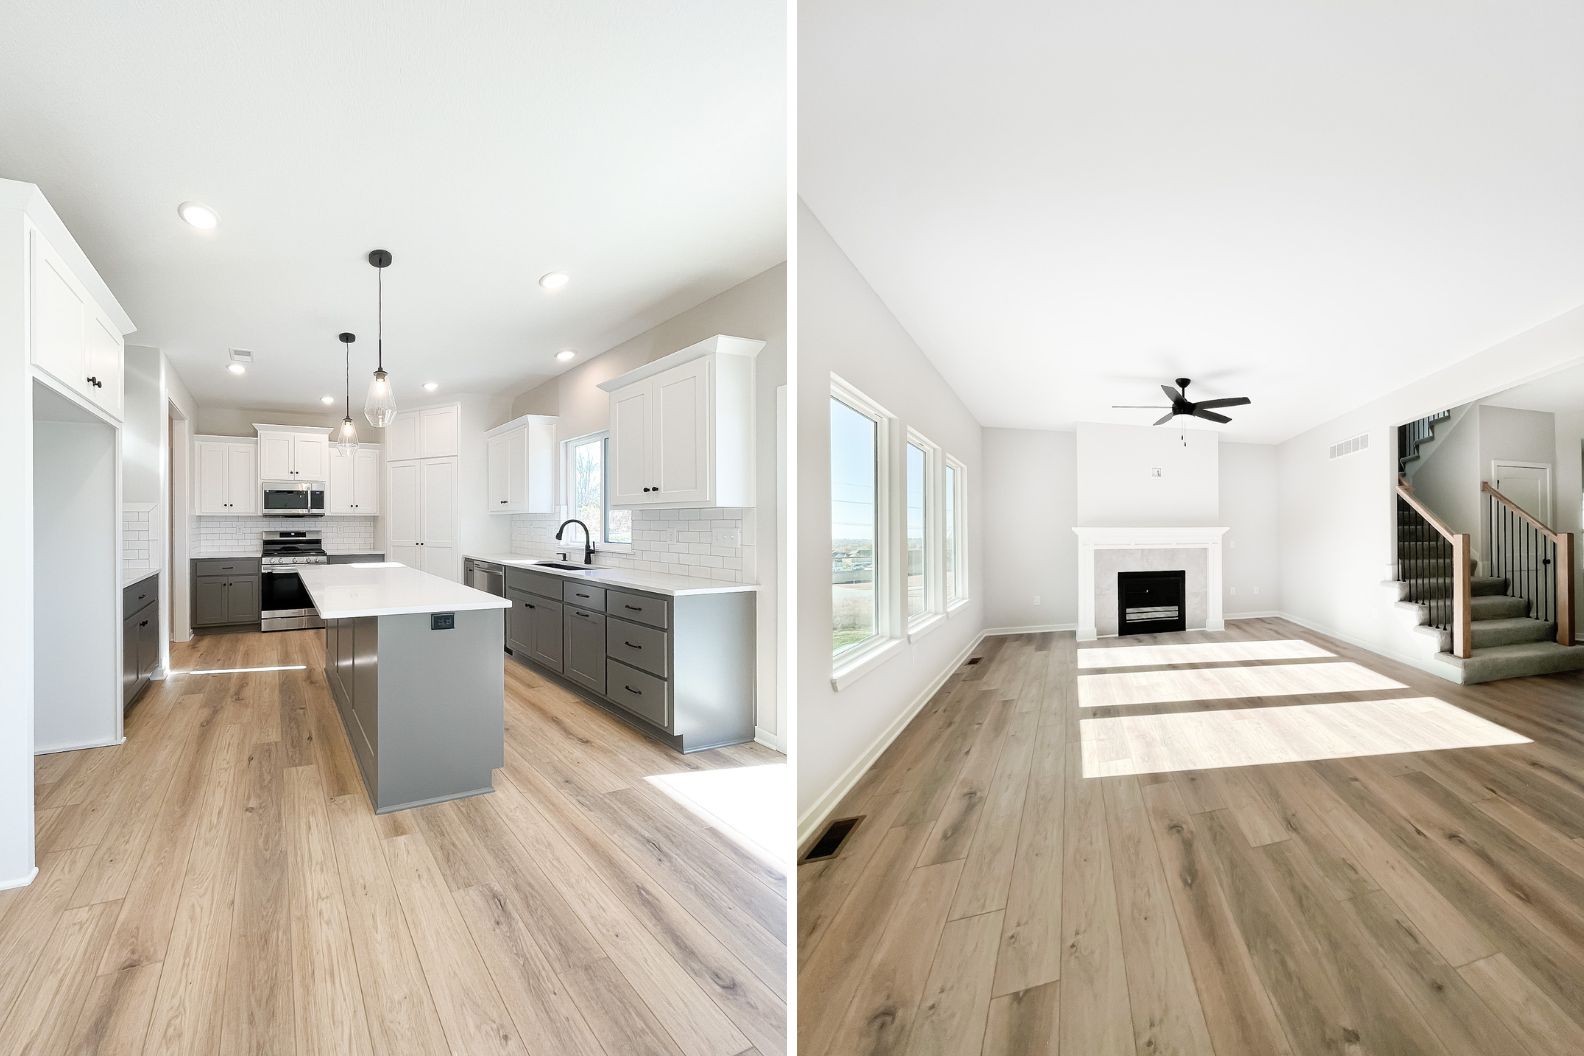 Affordable 2-Story Floor Plans In Kansas City - The Brooklyn Floor Plan